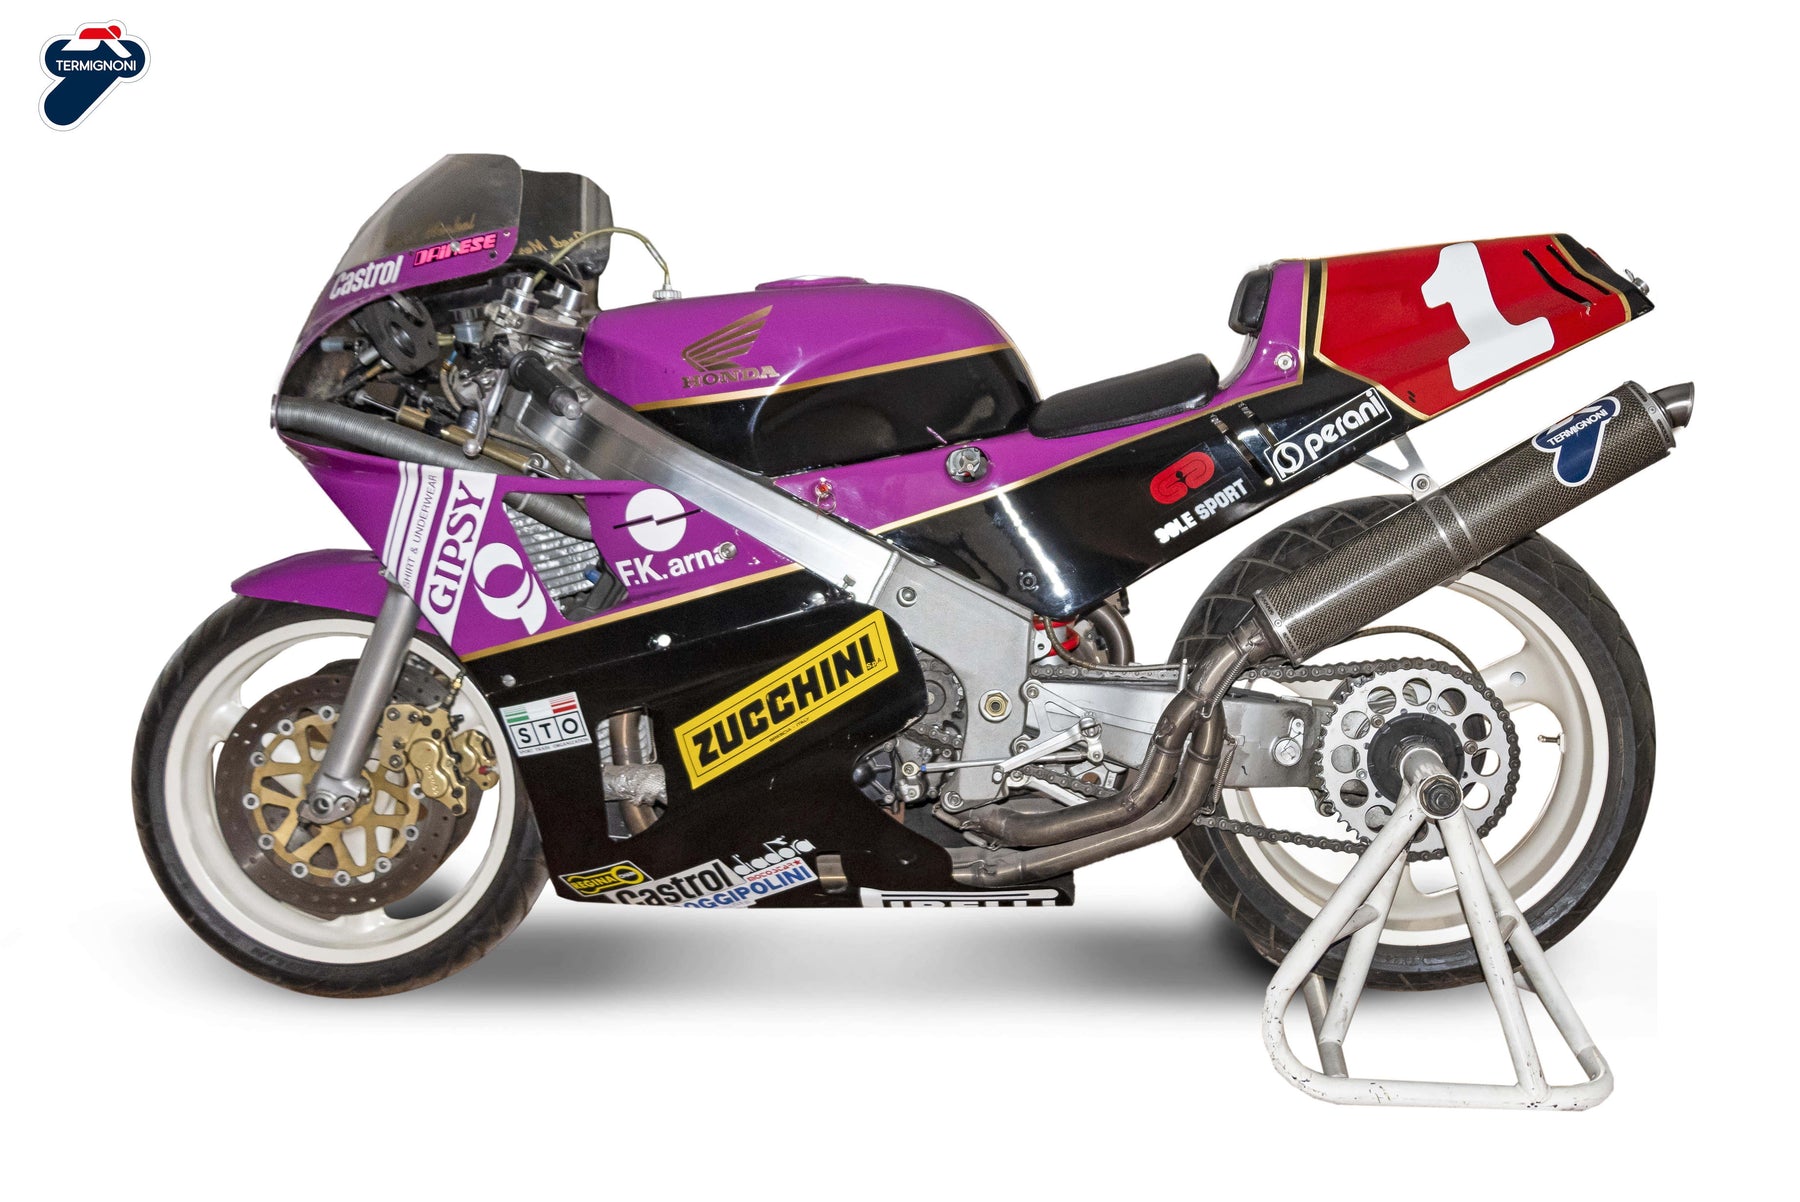 Termignoni Brings Back the Honda RC30